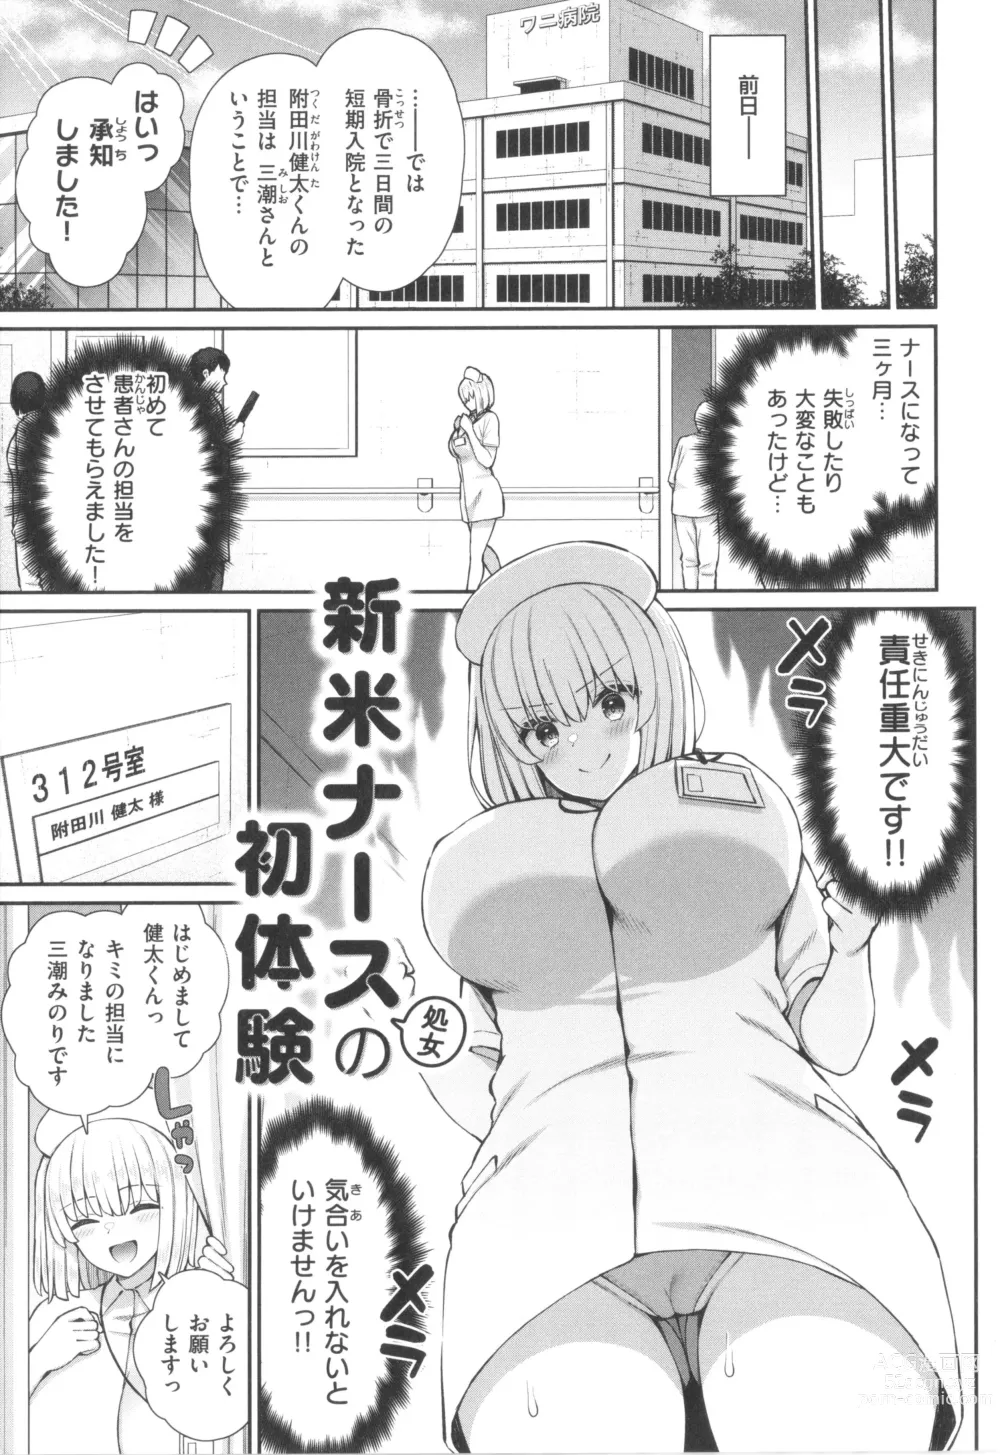 Page 7 of manga Akogare Hatsutaiken